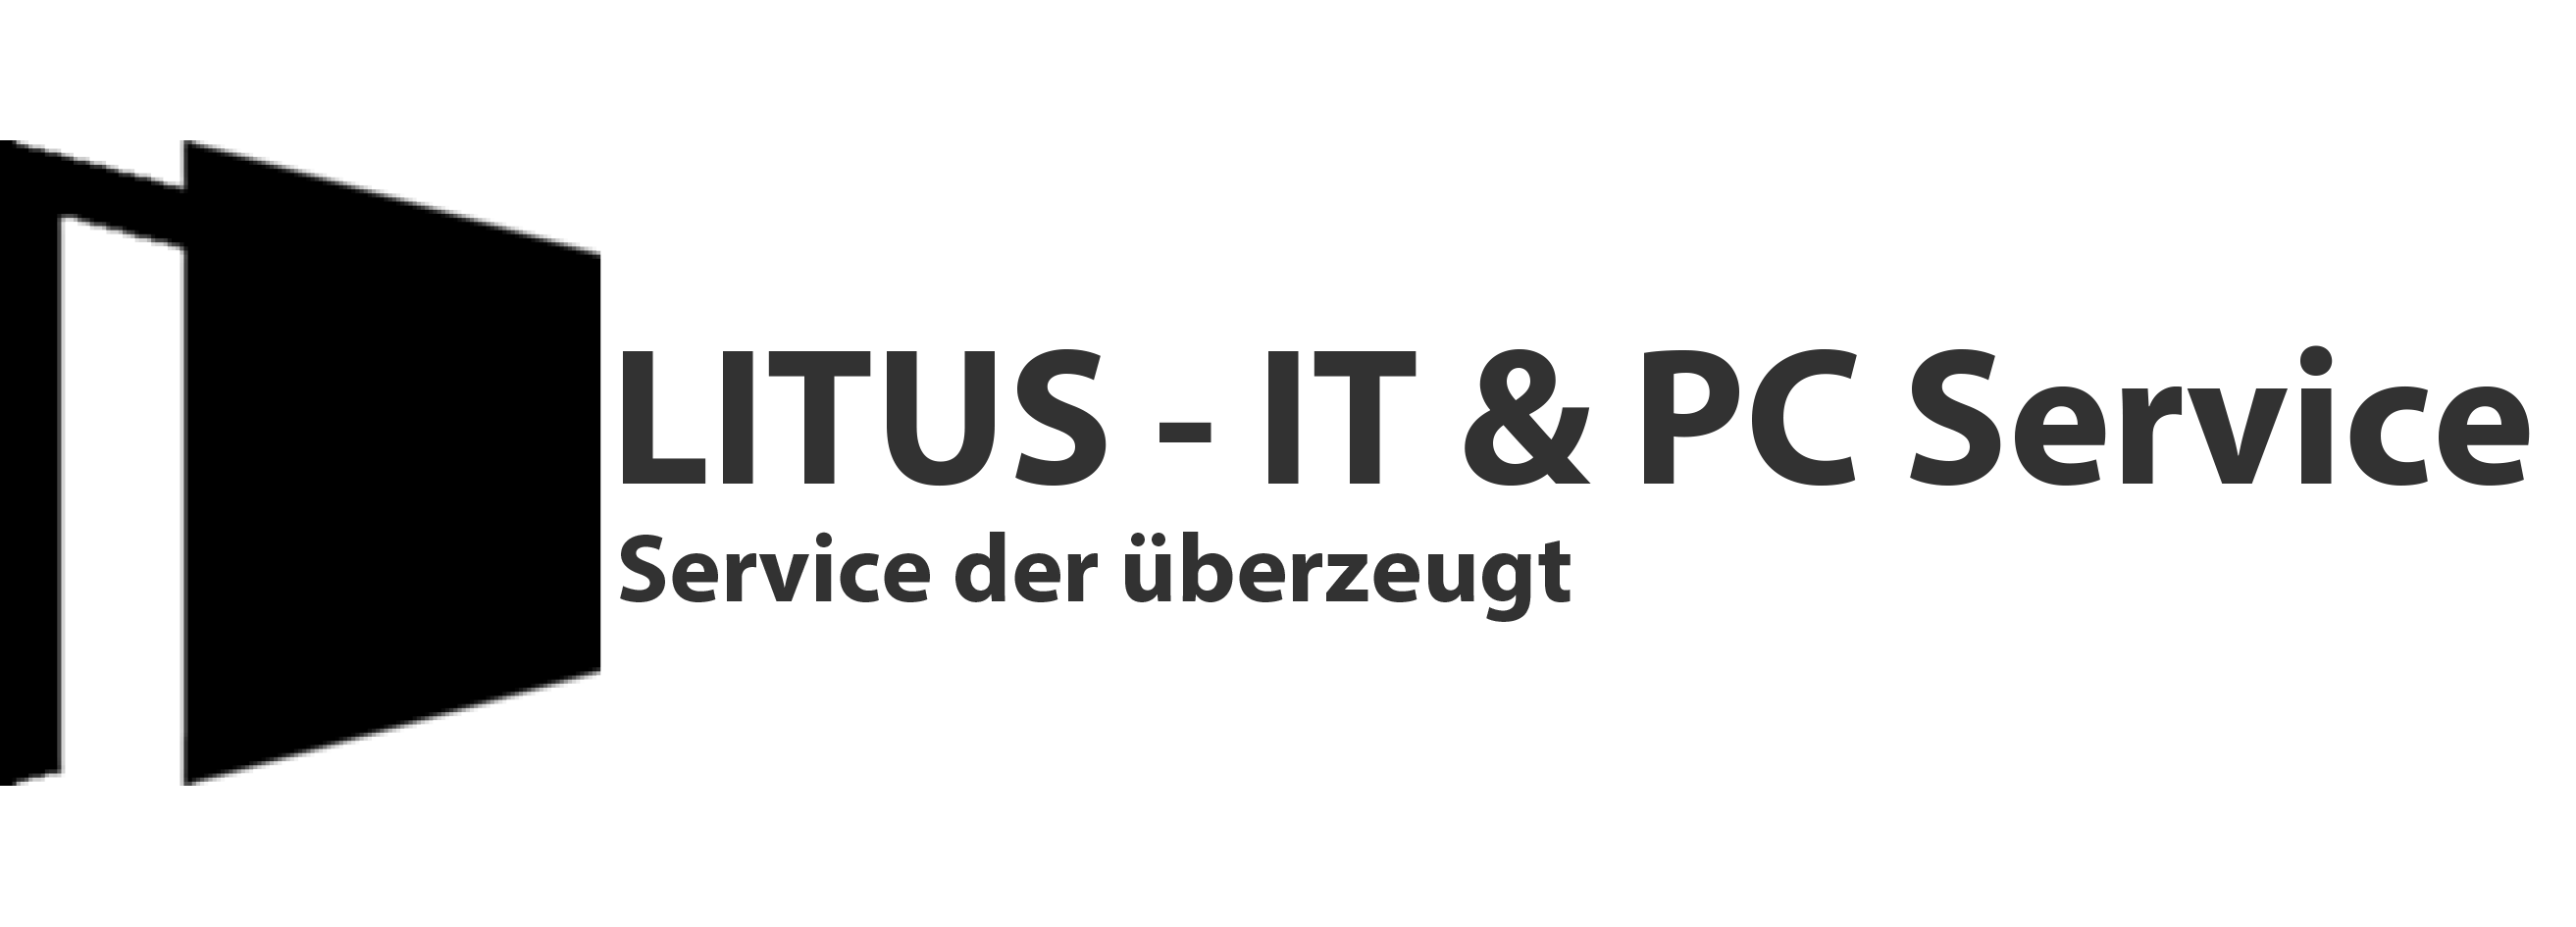 LITUS - Lundberg IT & Service Bensheim